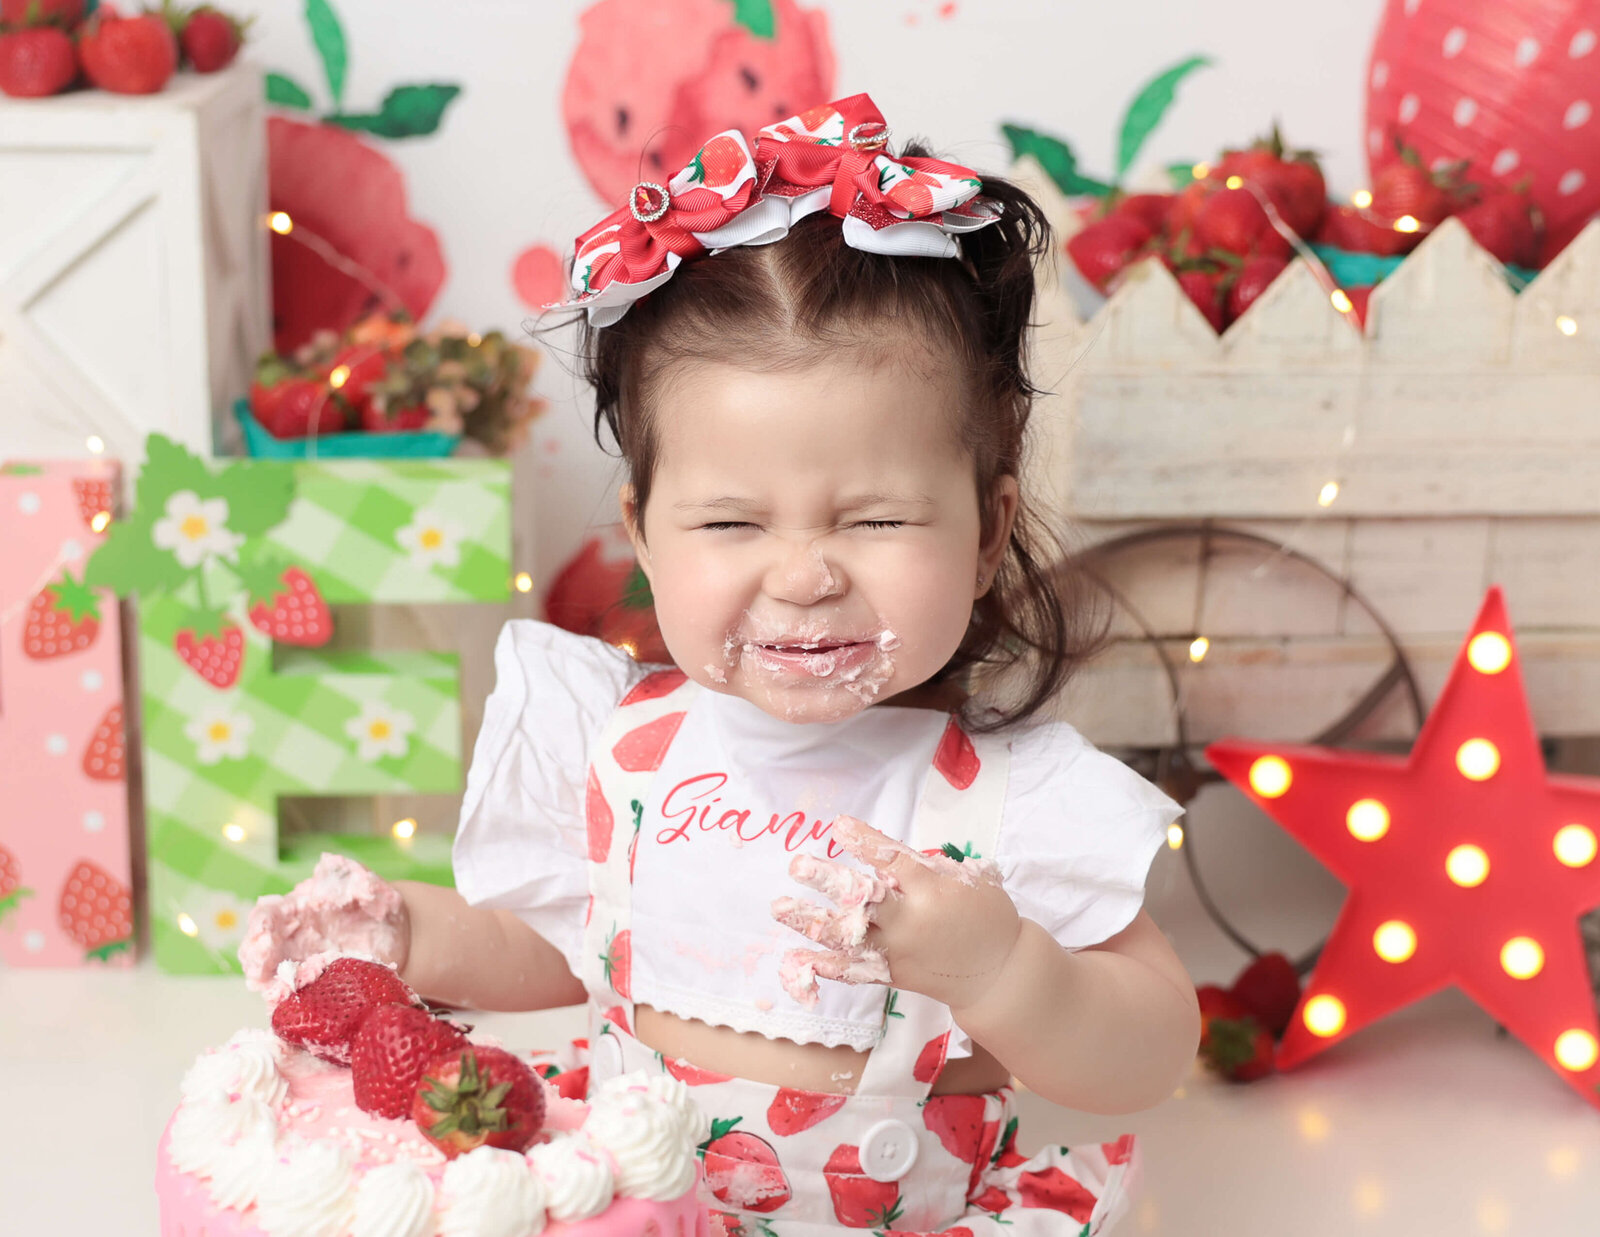 Girl with srunchy nose, strawberry theme cake smash.